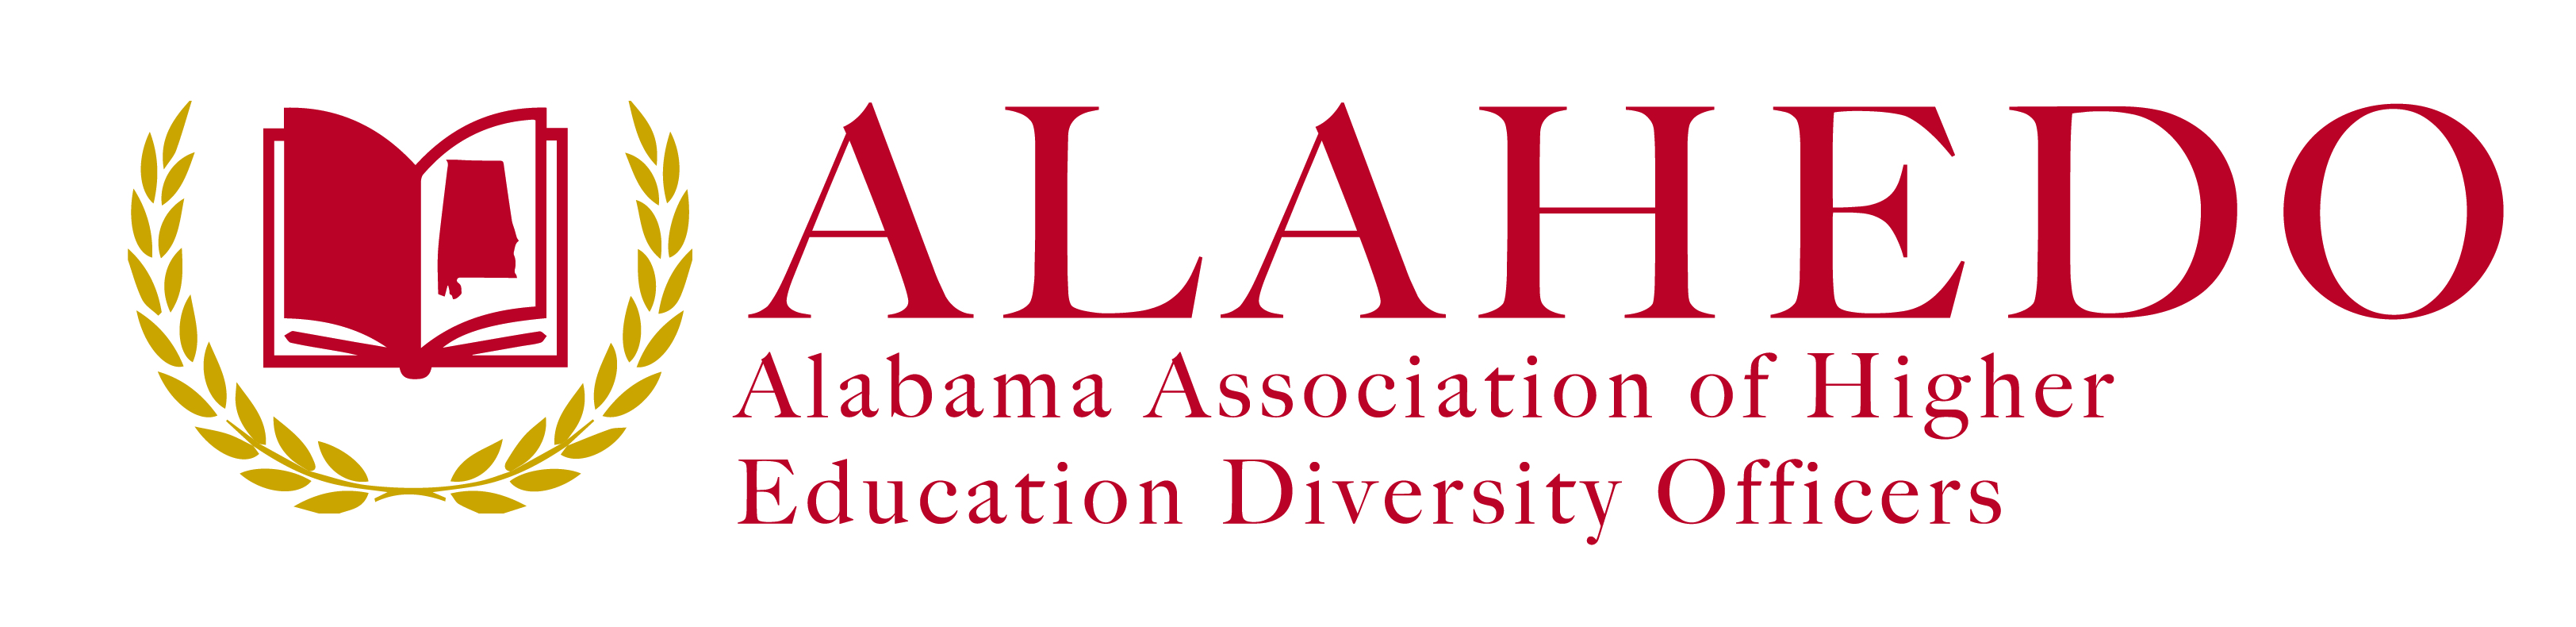 Alabama Association of Higher Education Diversity Officers (ALAHEDO)